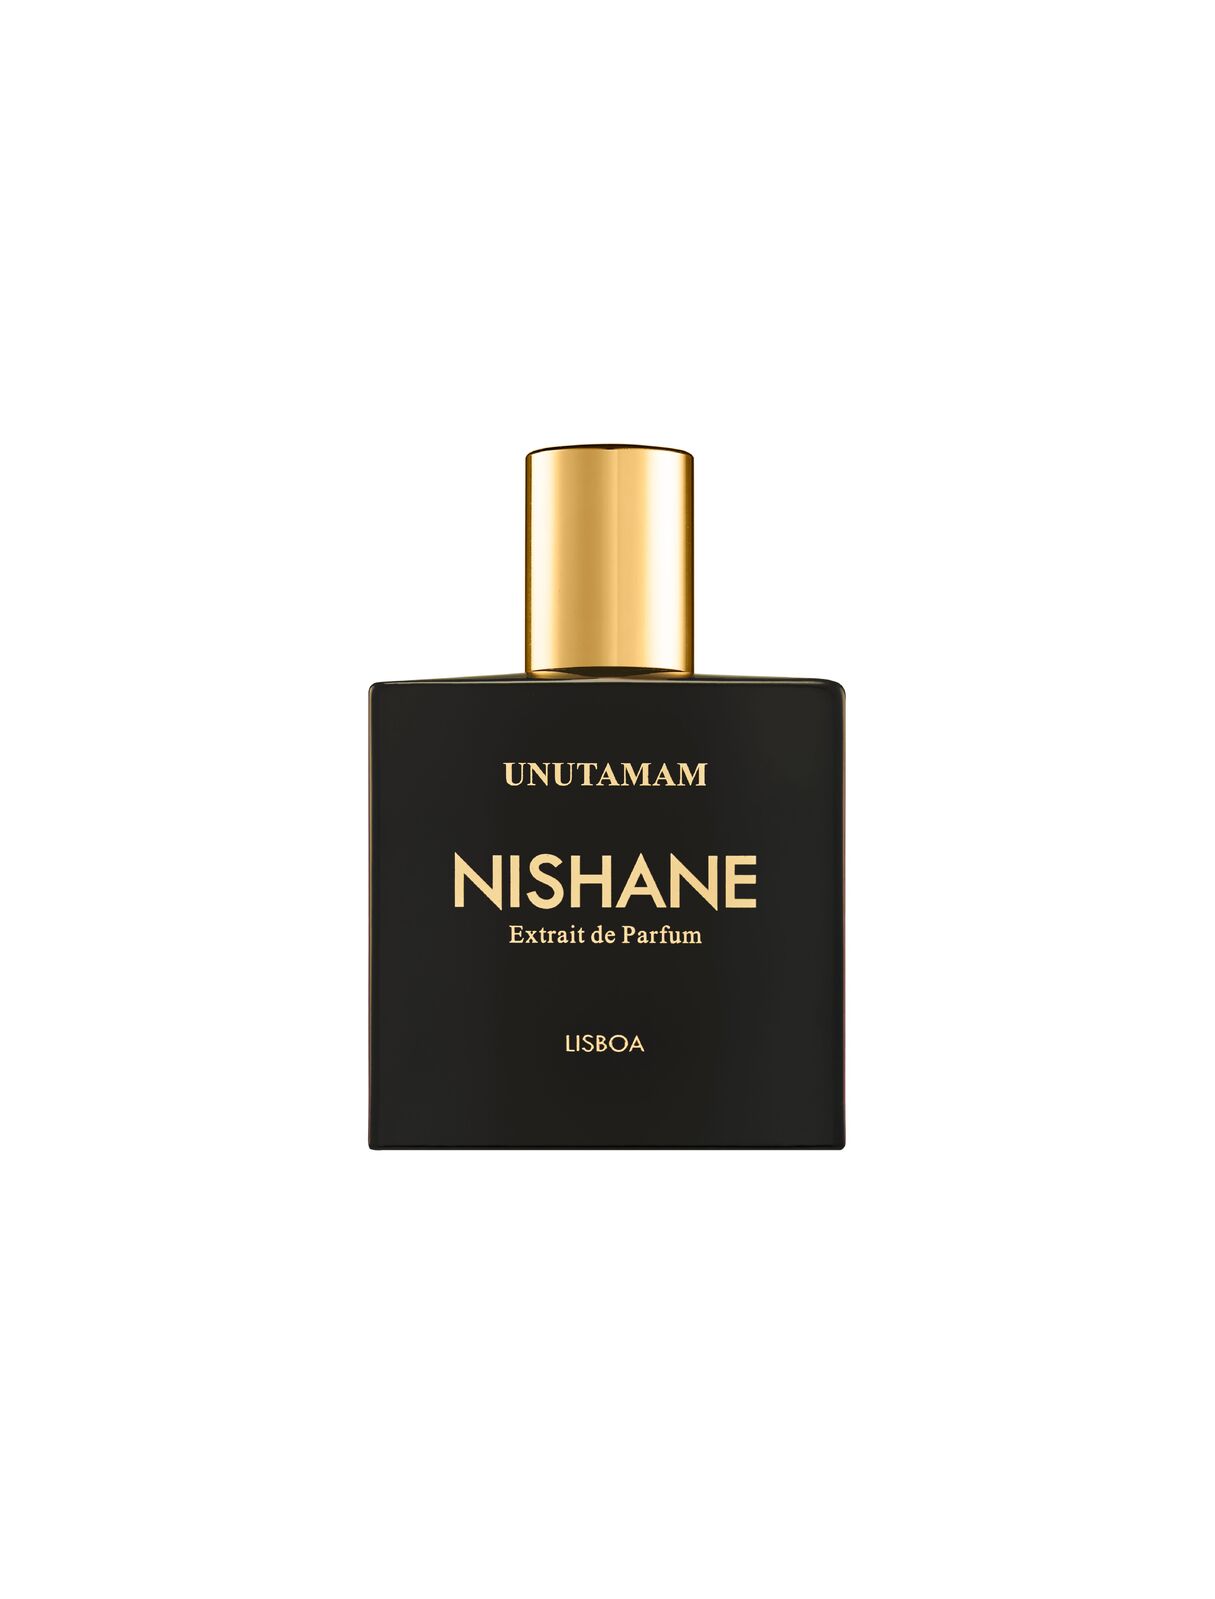 Nishane Unutamam Extrait De Parfum 50ml